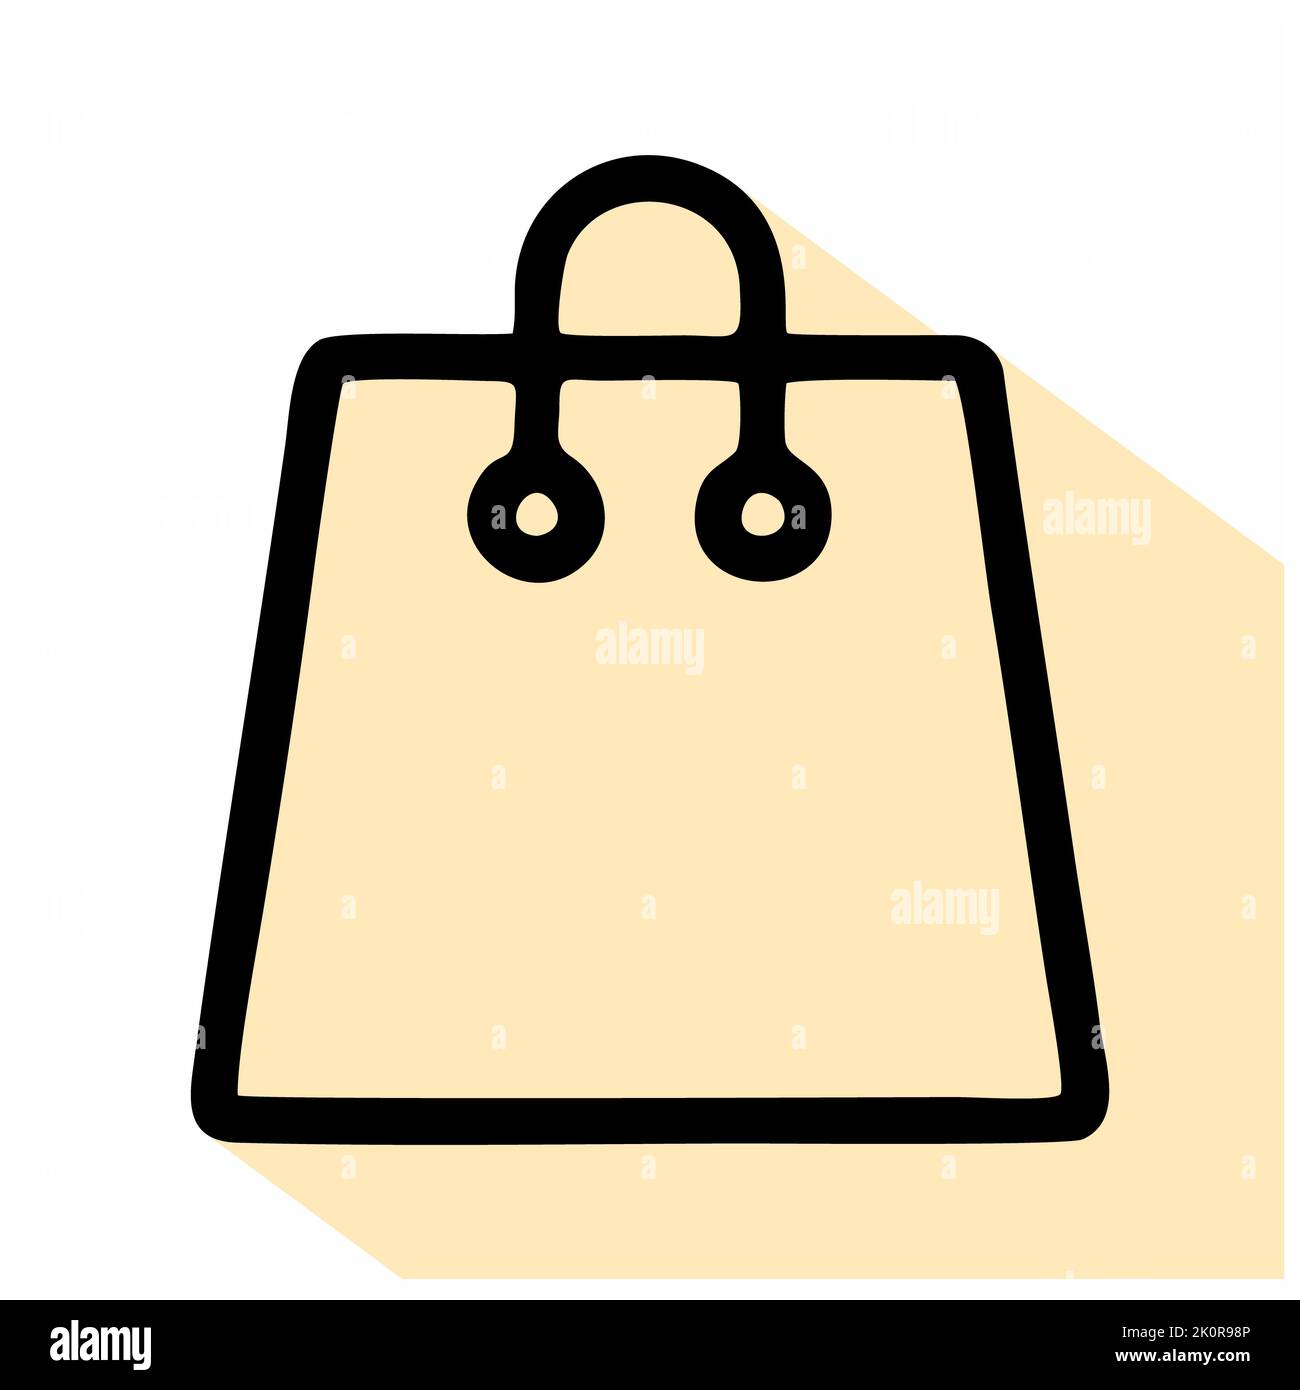 19,010 Shopper Logos Images, Stock Photos, 3D objects, & Vectors